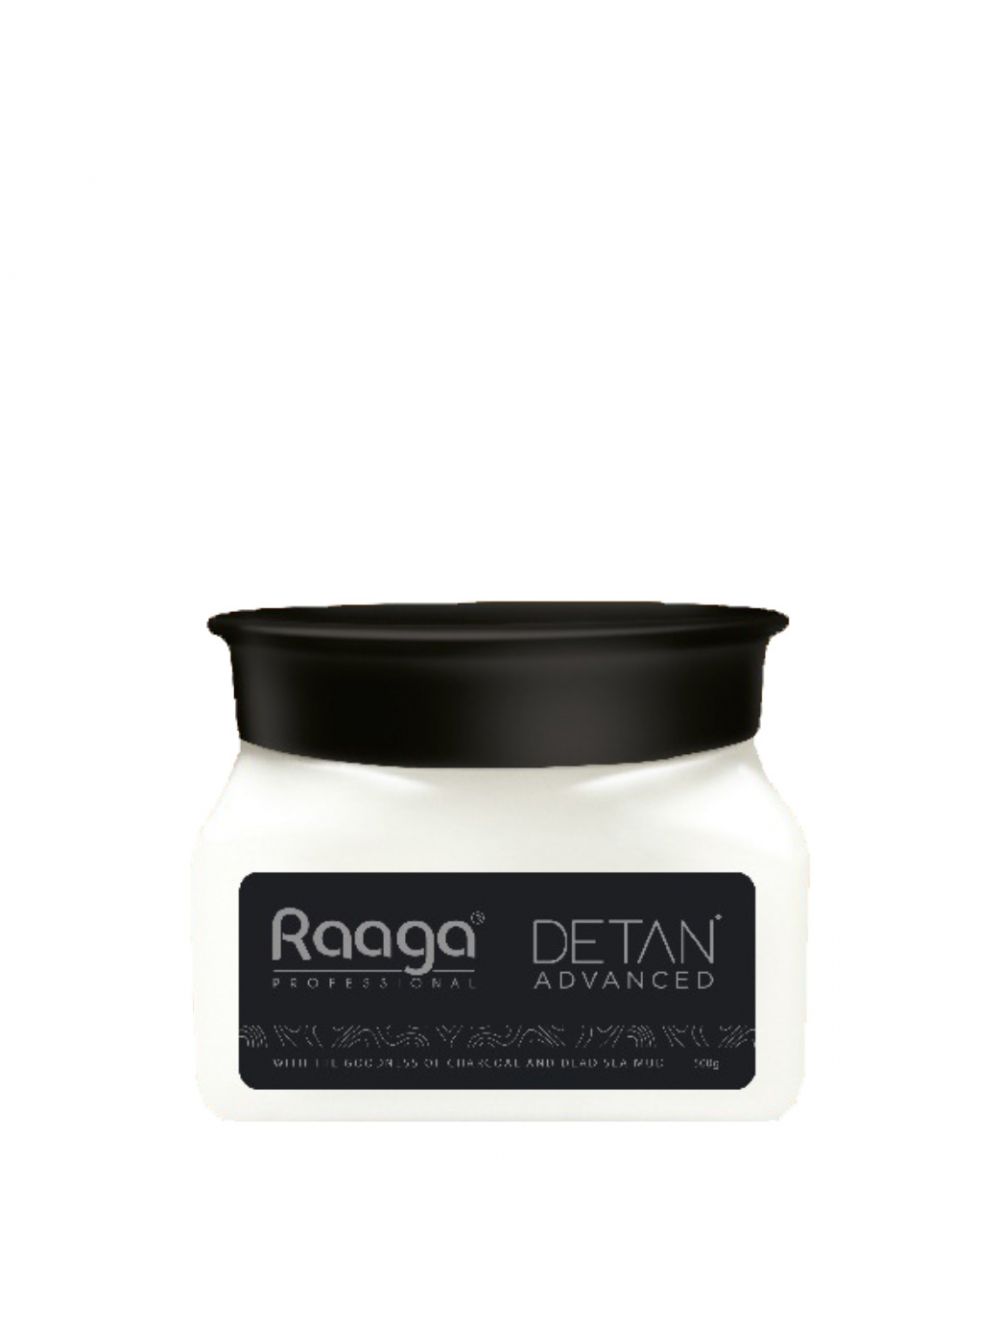 Raaga Professional DETAN Adanced With Charcoal (500gm)